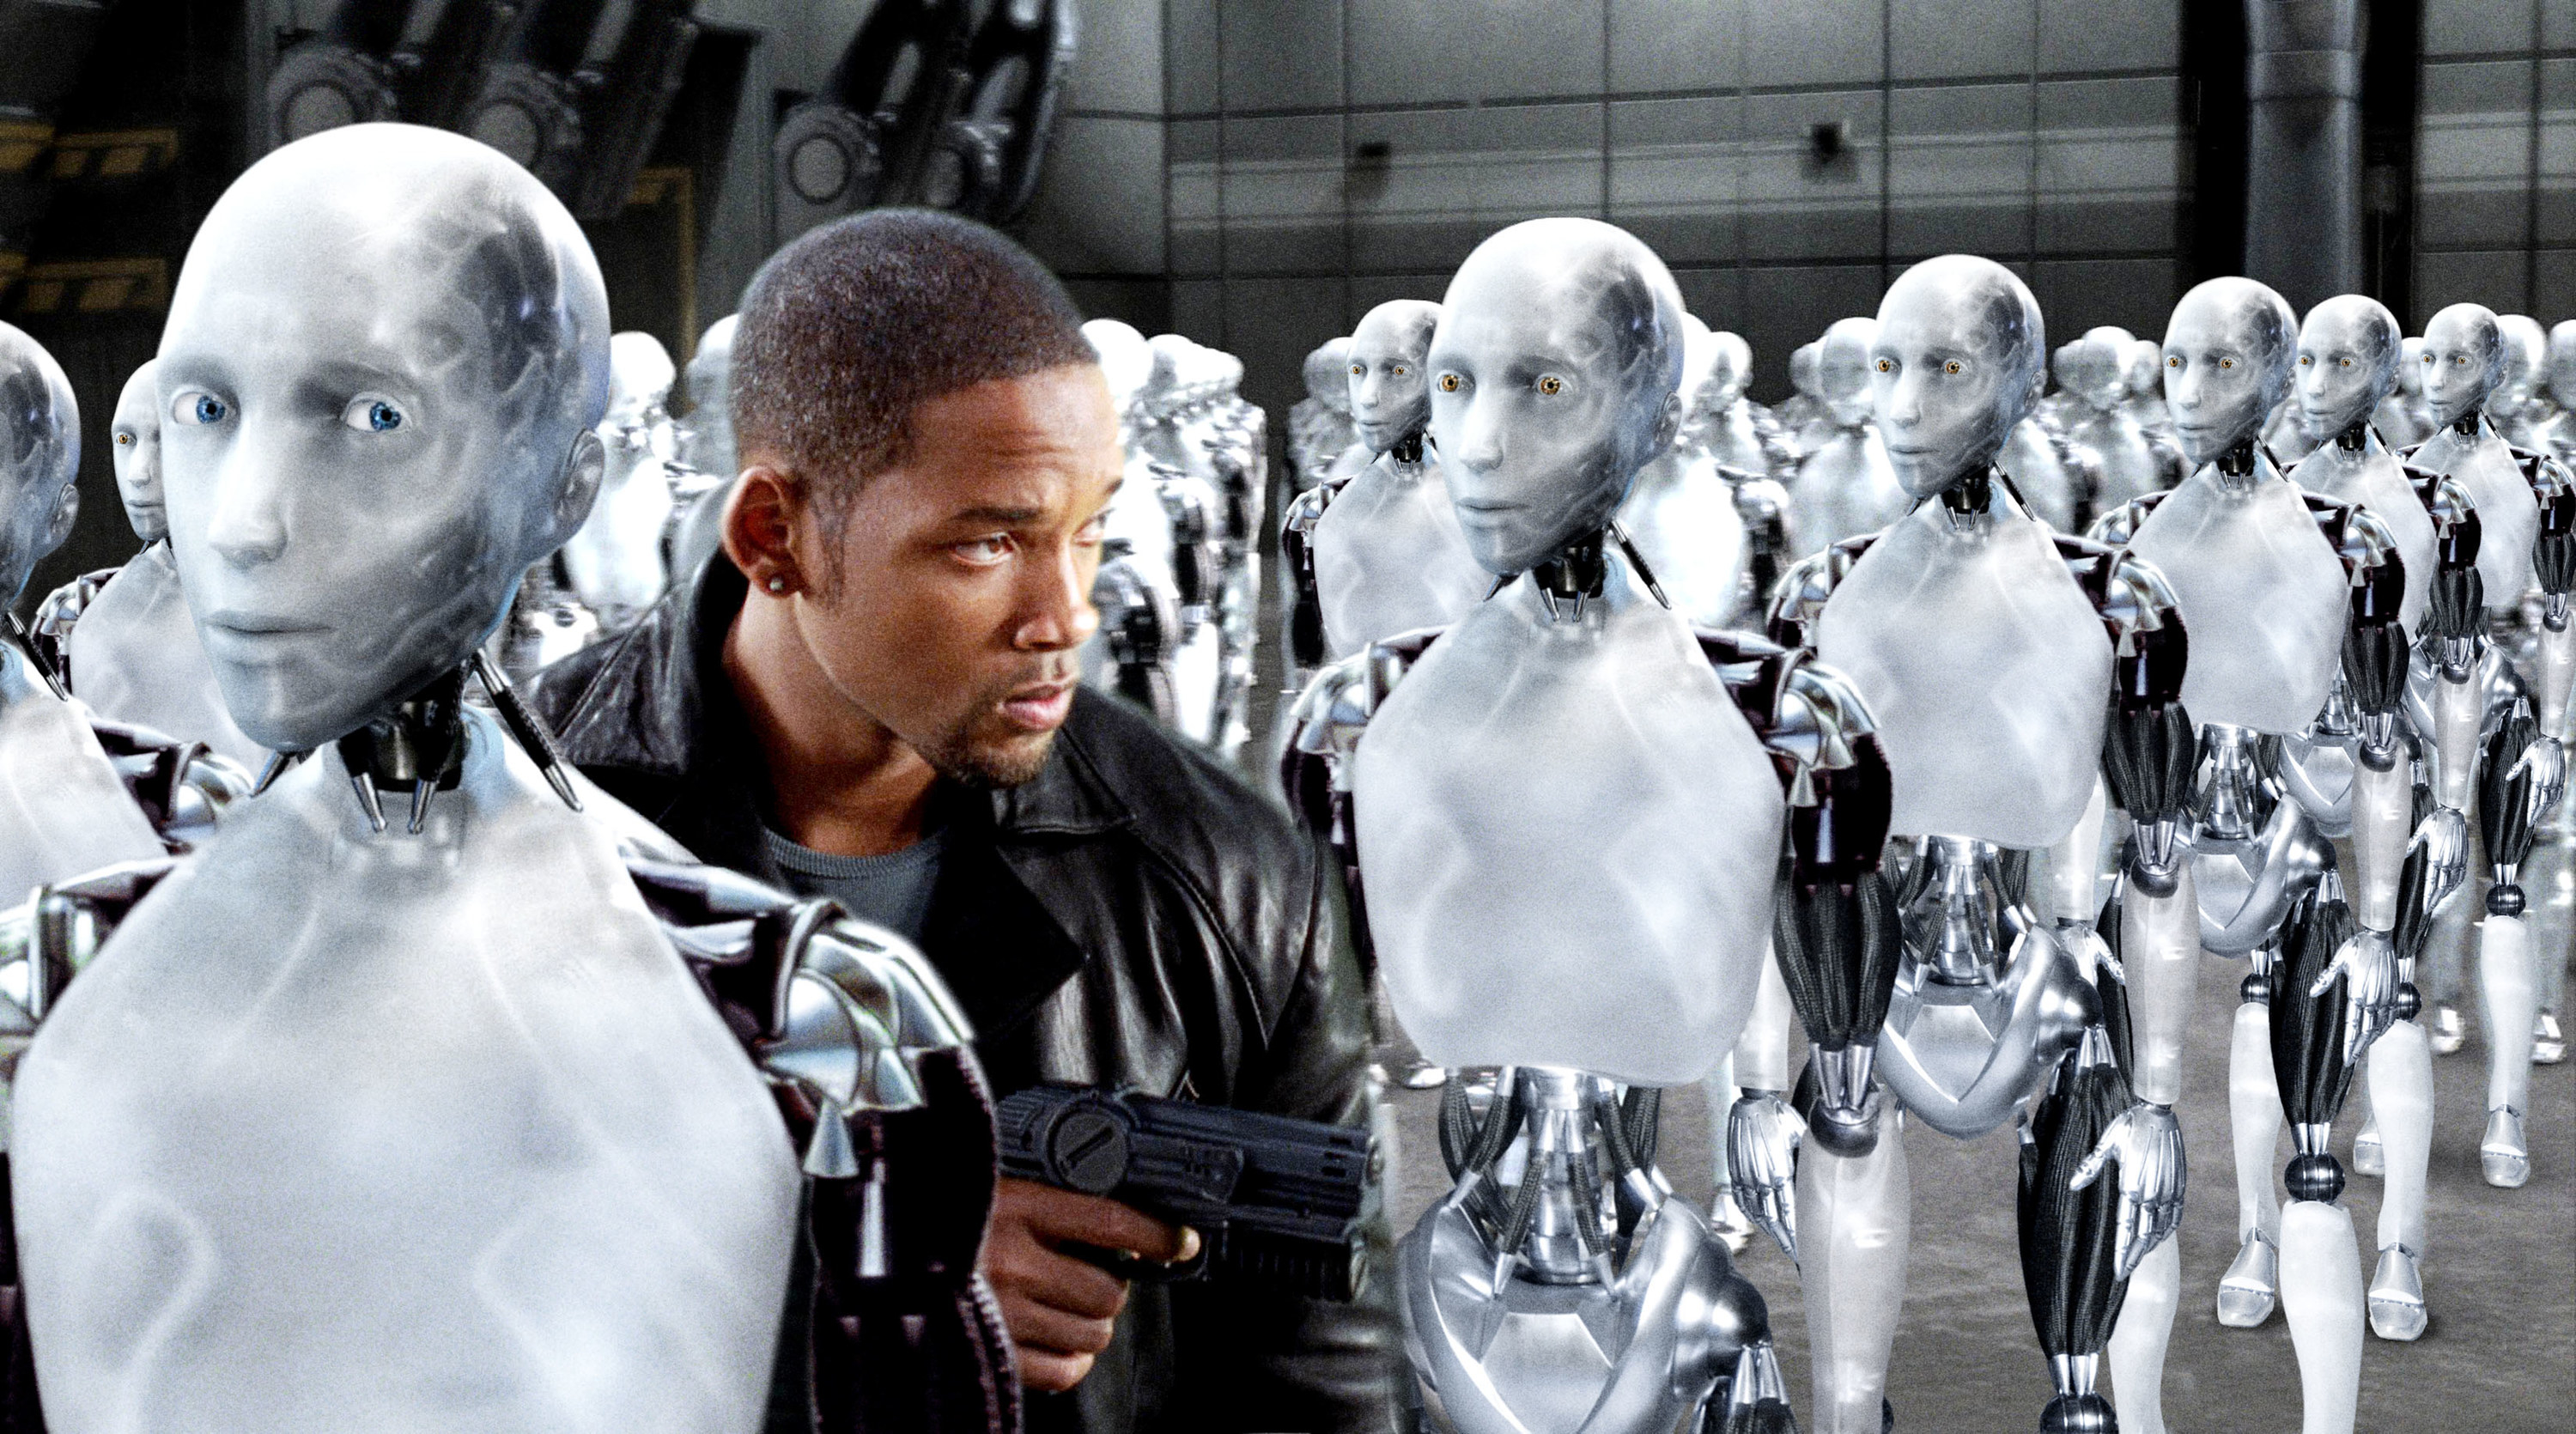 A man walks through troops of robots